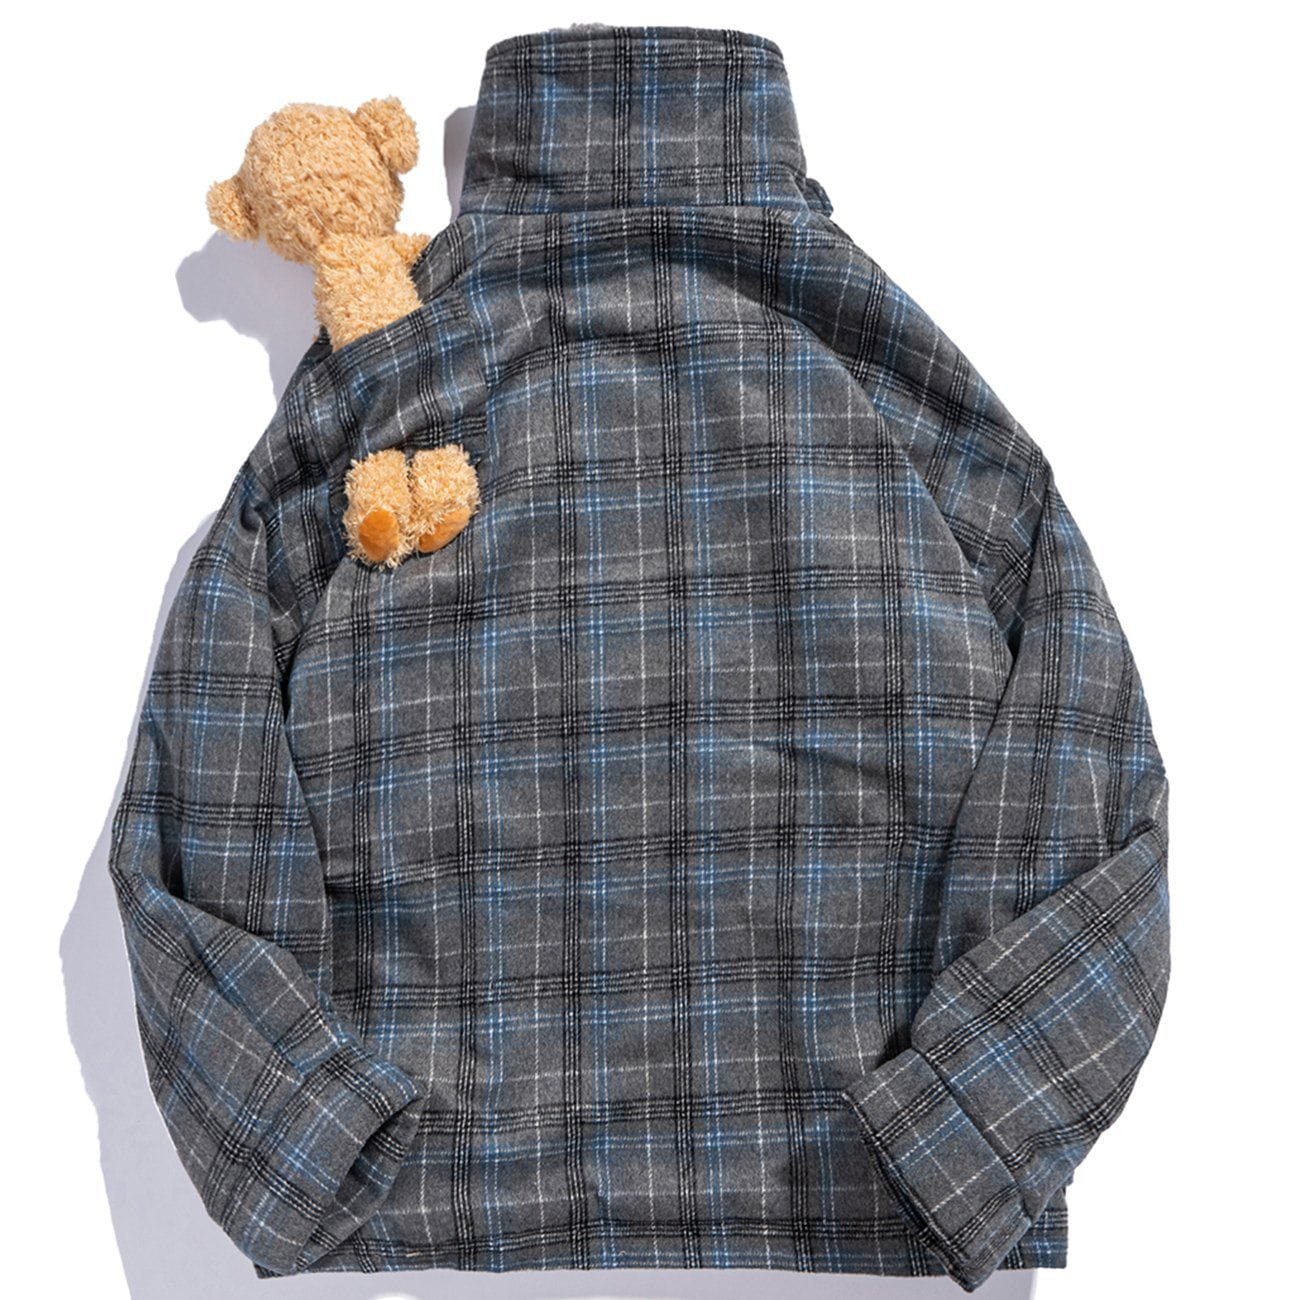 Eprezzy® - Removable Bear Doll Winter Coat Streetwear Fashion - eprezzy.com